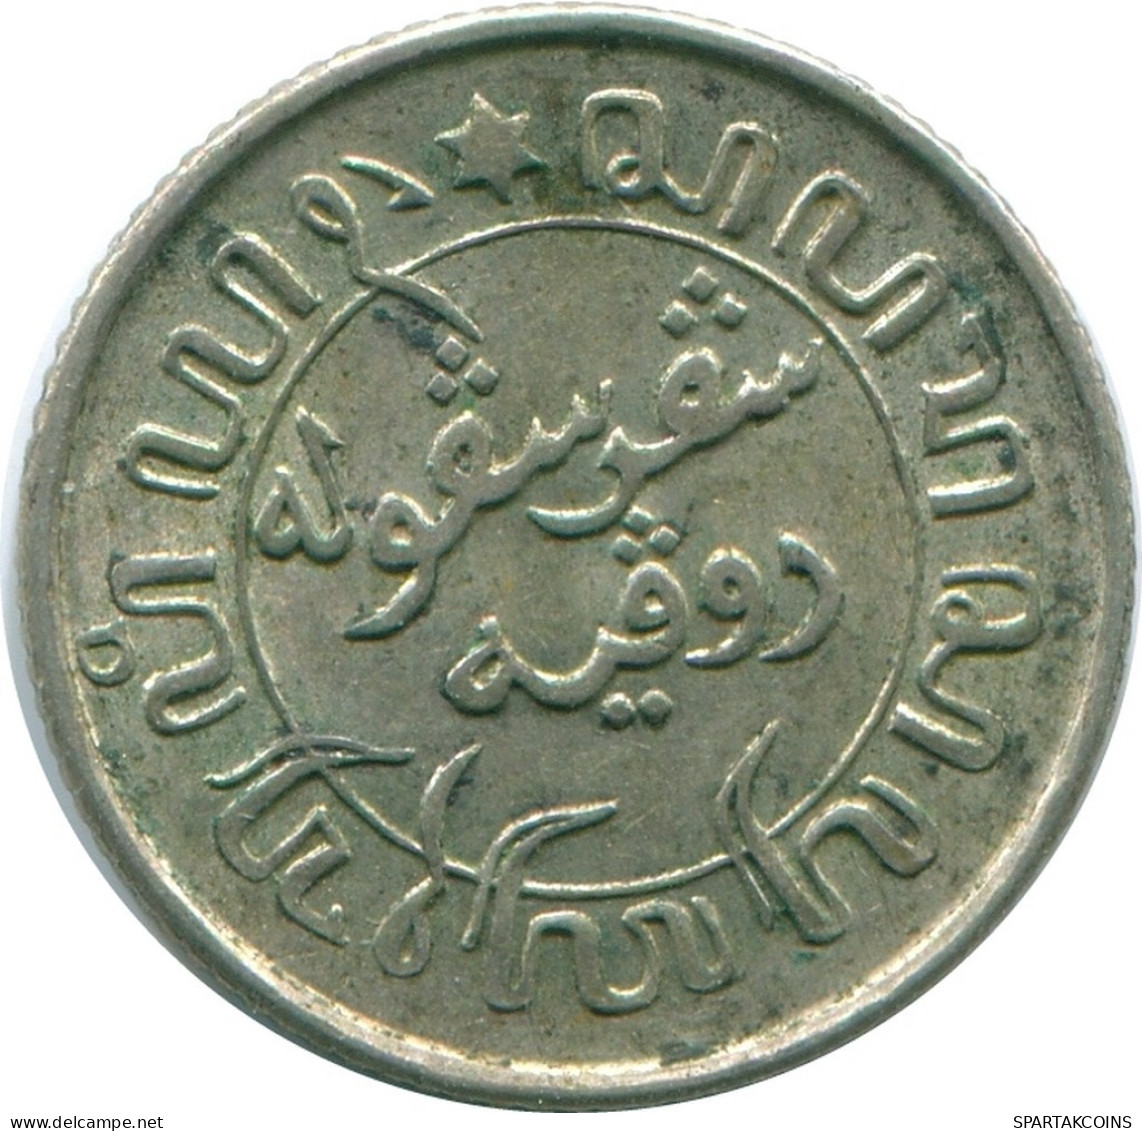 1/10 GULDEN 1942 NETHERLANDS EAST INDIES SILVER Colonial Coin #NL13957.3.U.A - Indes Néerlandaises